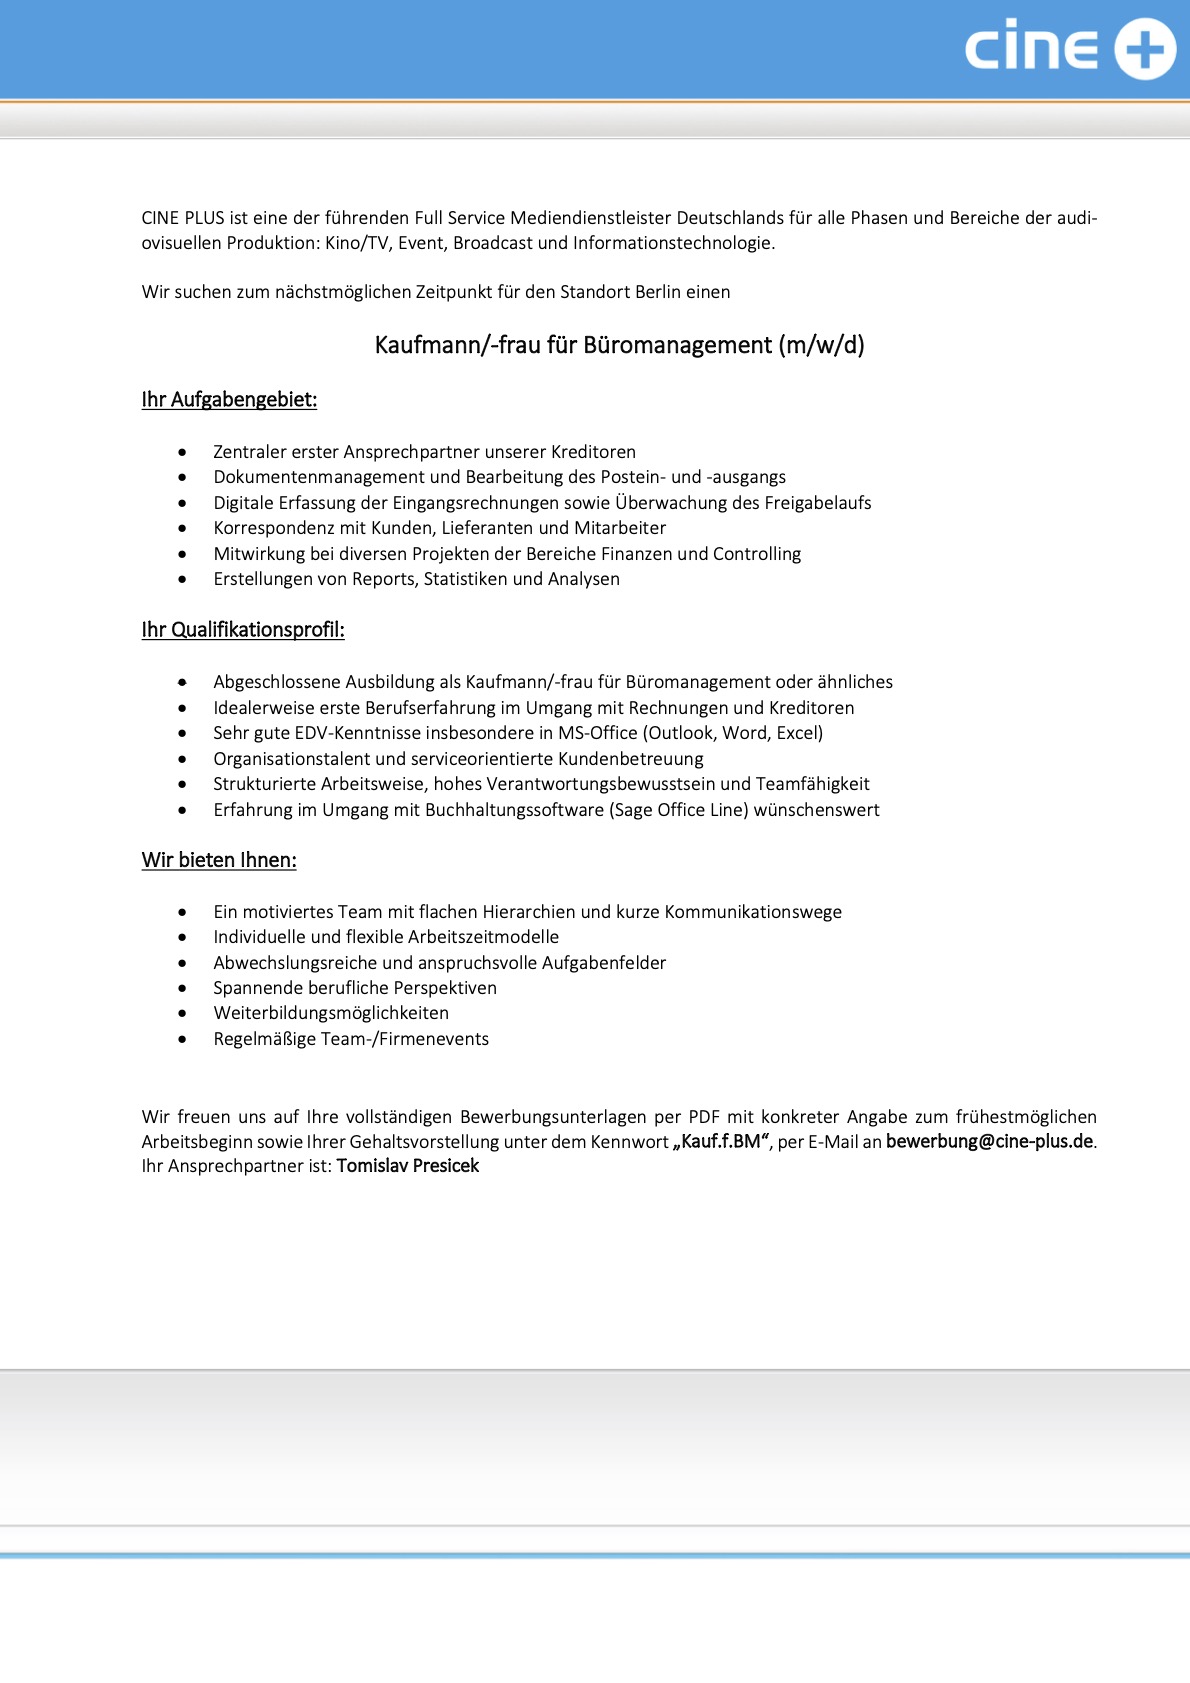 Kaufmann/-frau für Büromanagement (m/w/d)